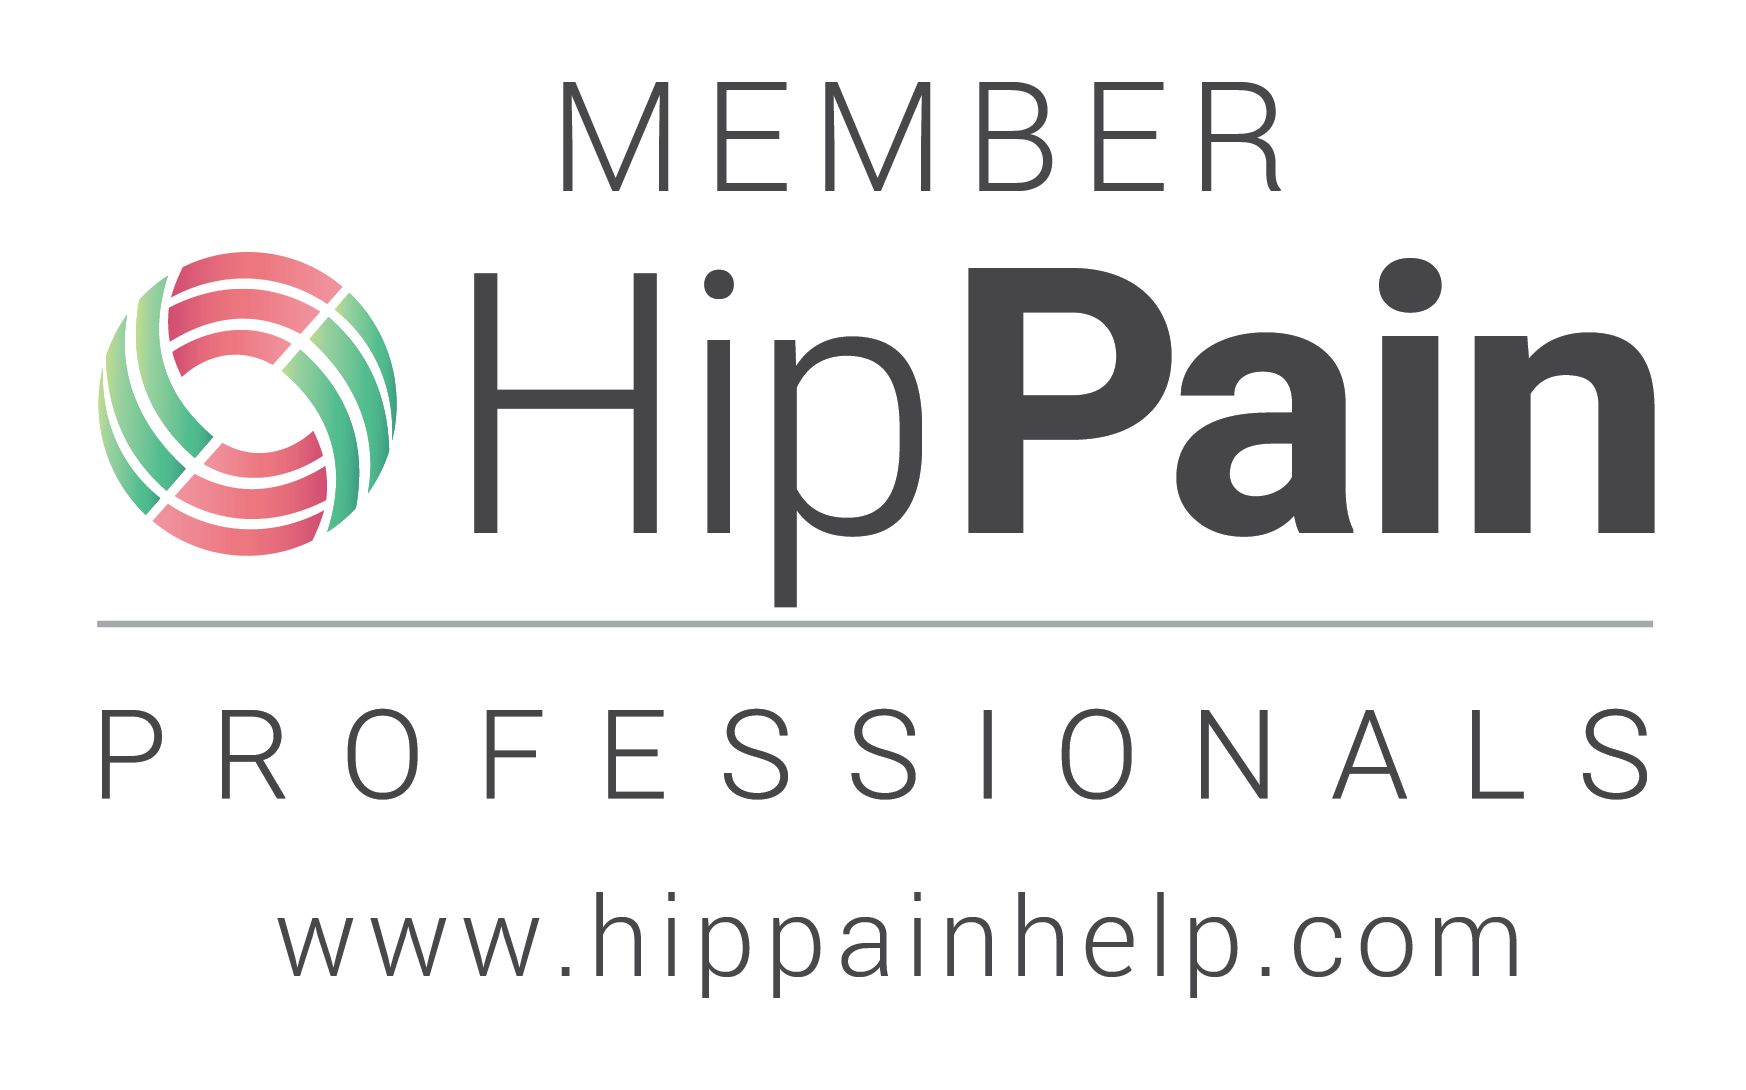 Hip Pain Professionals member logo